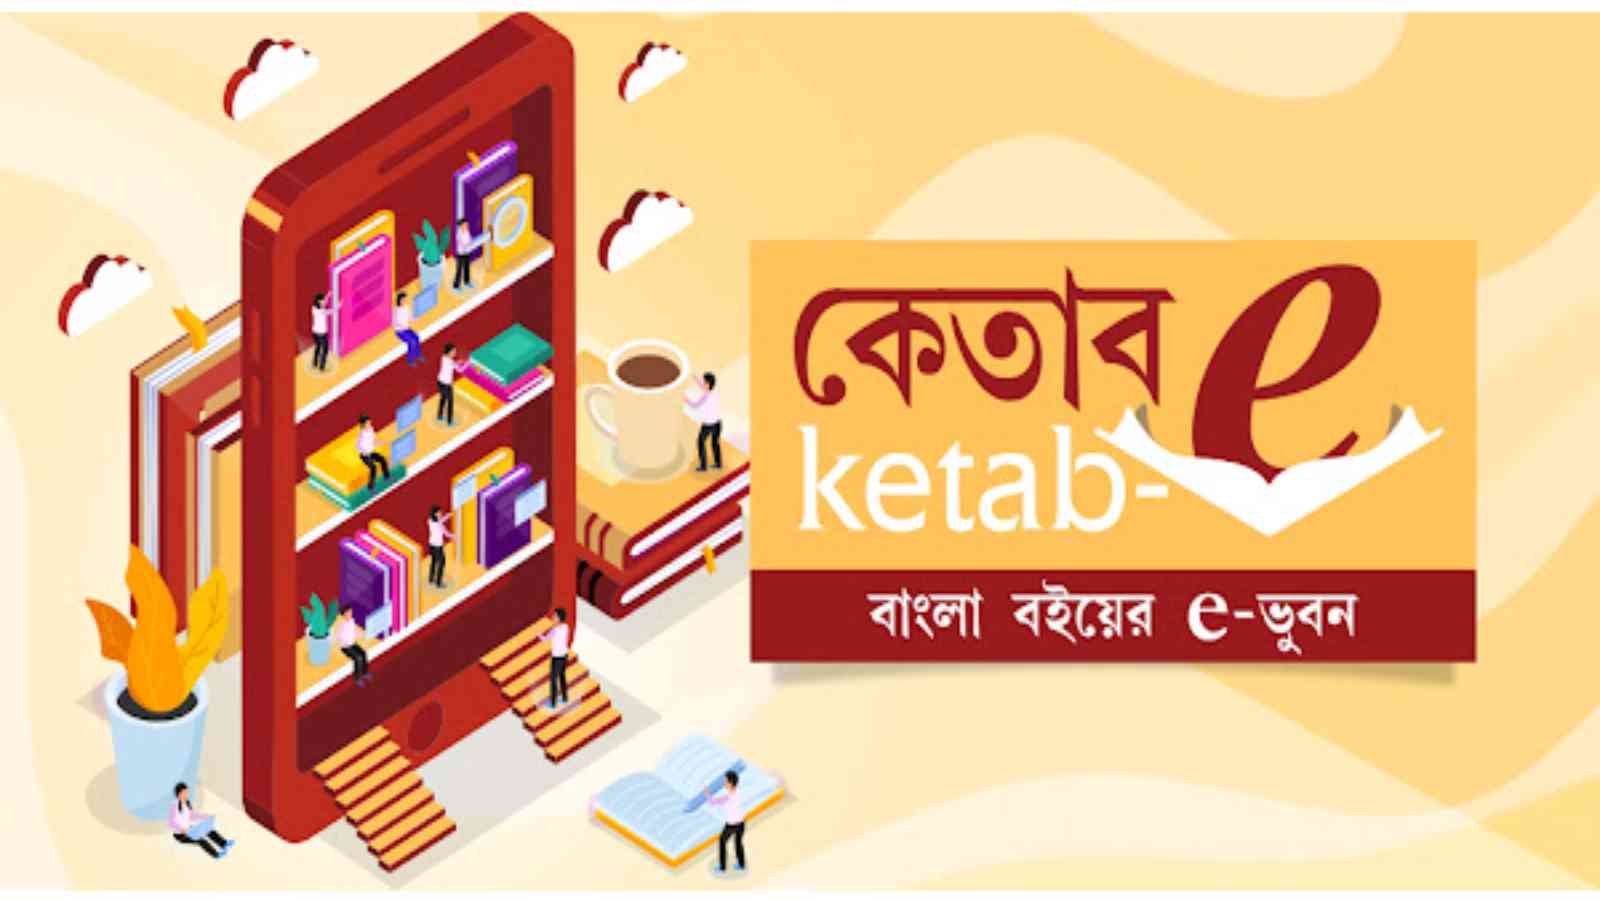 World’s First Bengali E-Library | Ketab-e.net